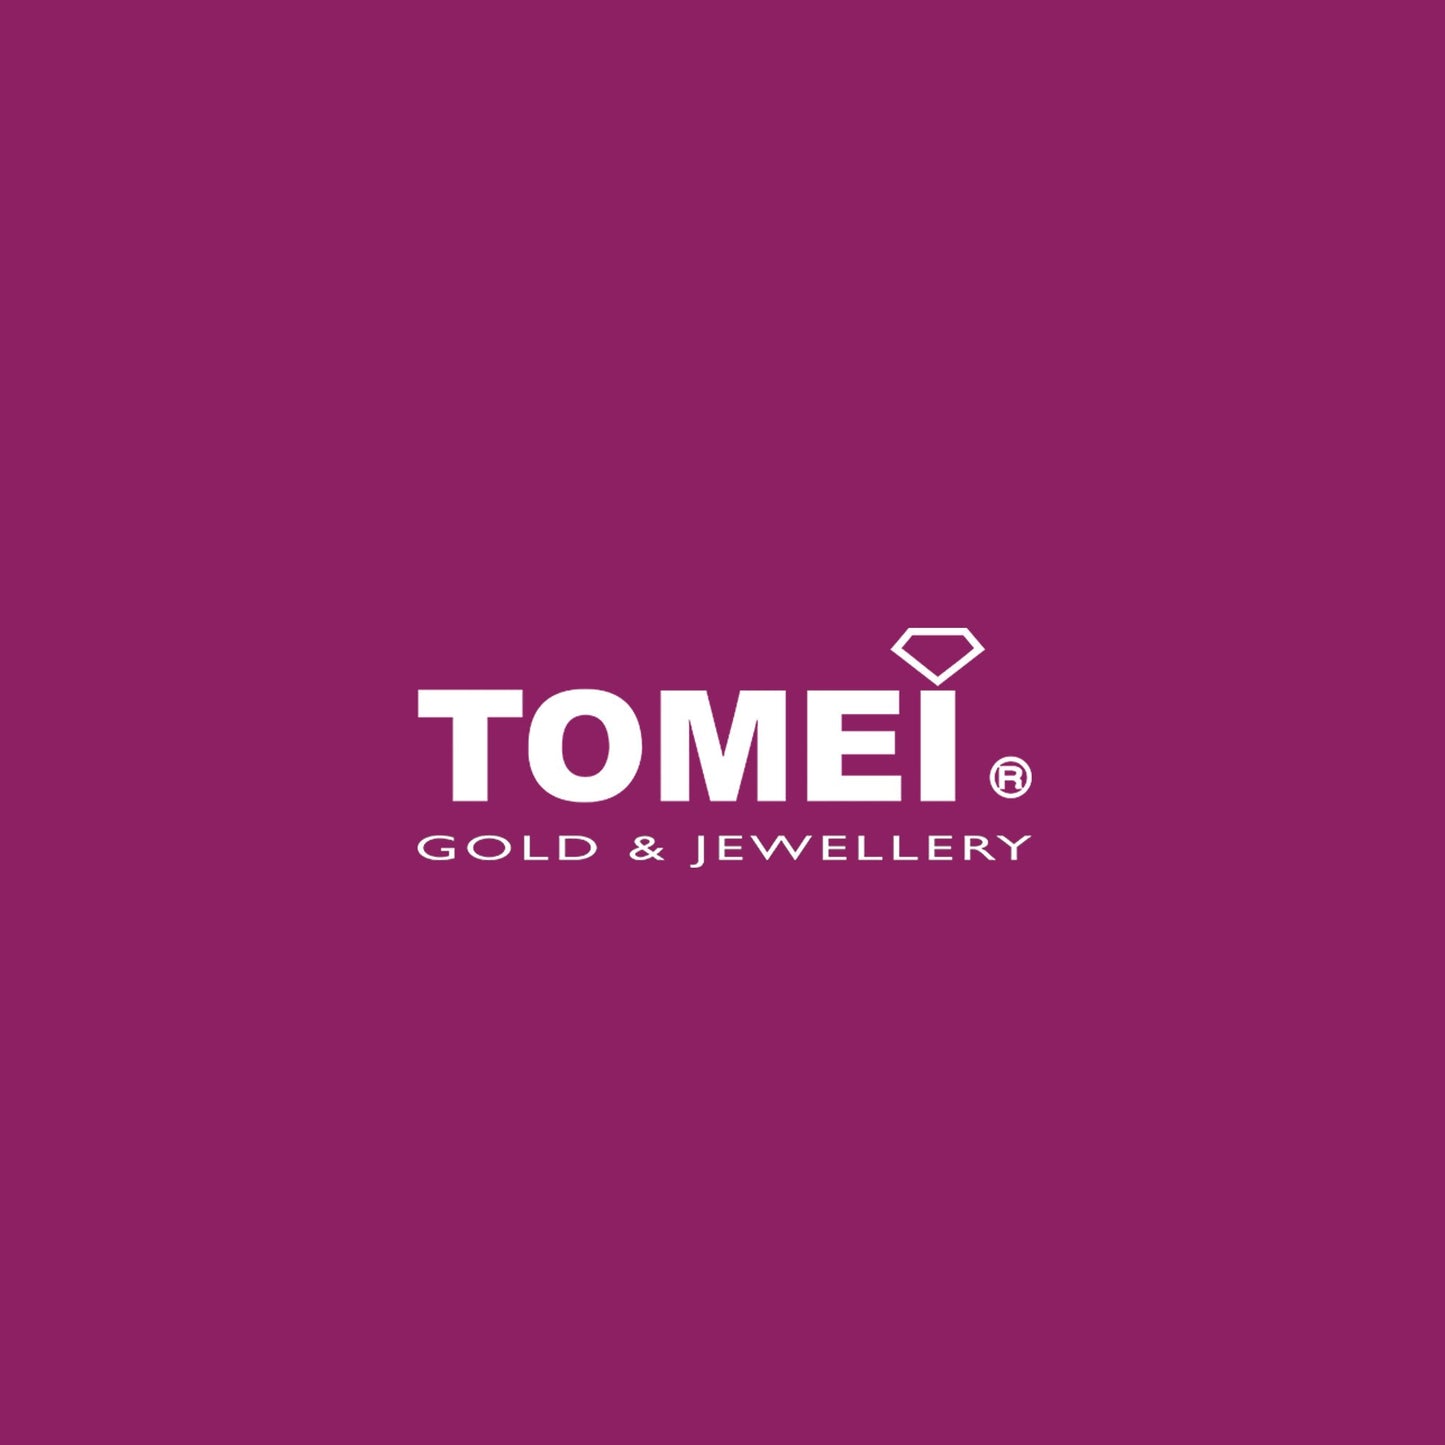 TOMEI Purely Heart Diamond Pendant, White Gold 750 (P3178)